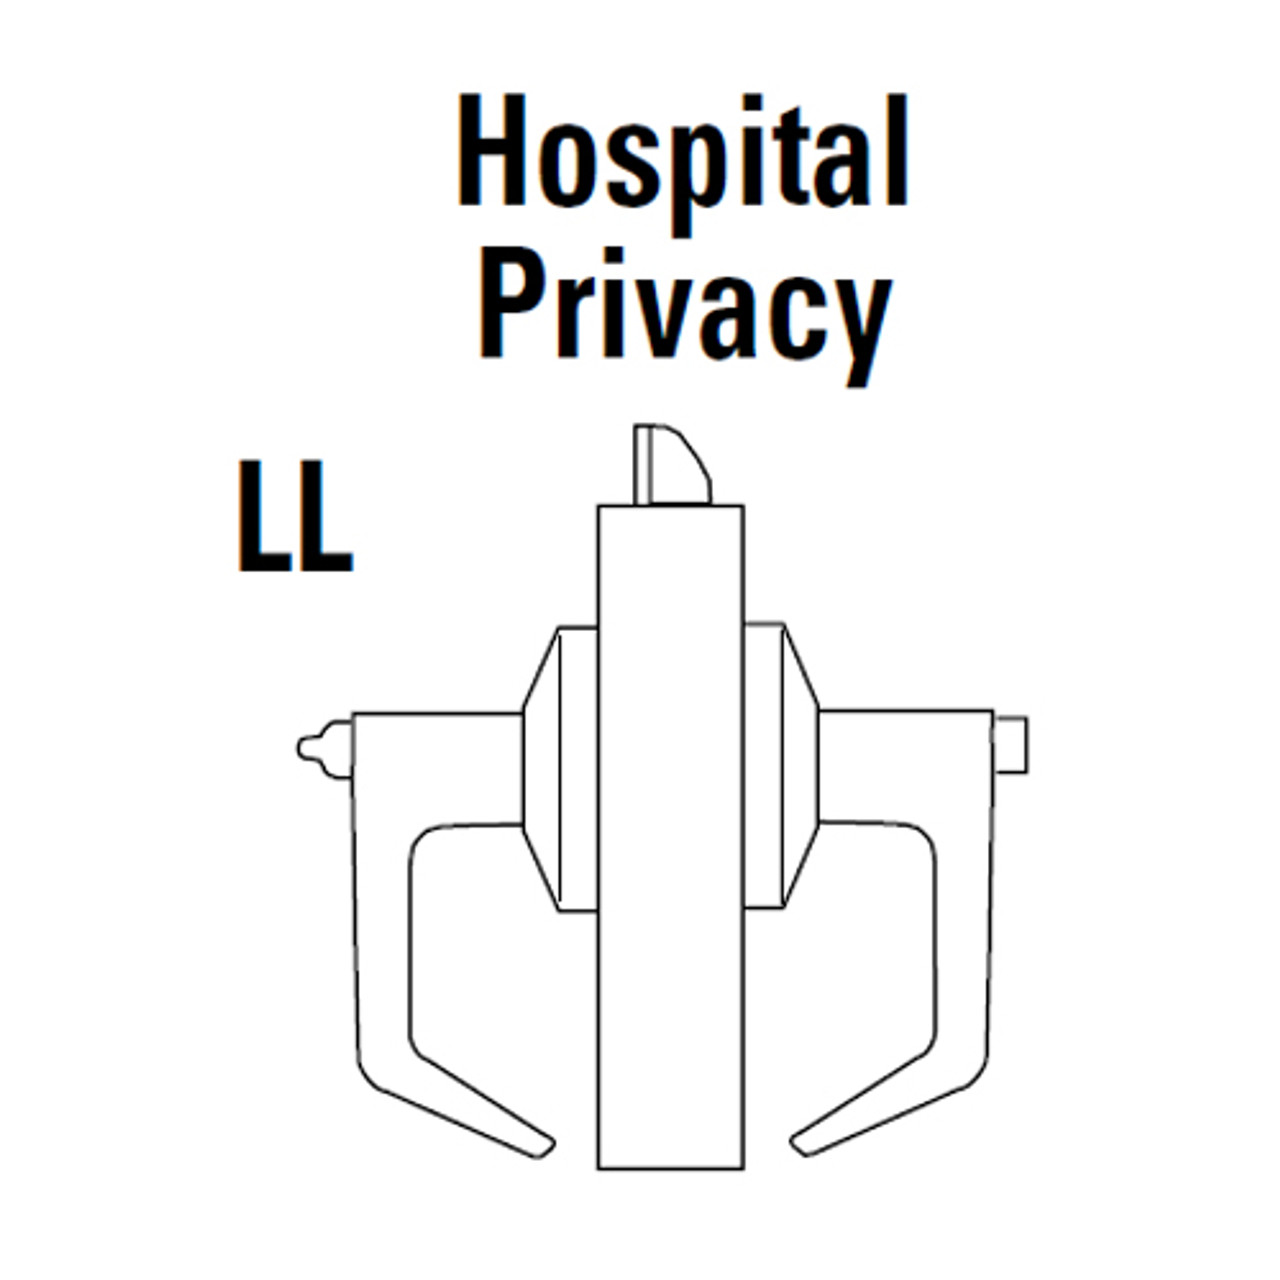 9K30LL14LSTK626 Best 9K Series Hospital Privacy Heavy Duty Cylindrical Lever Locks in Satin Chrome